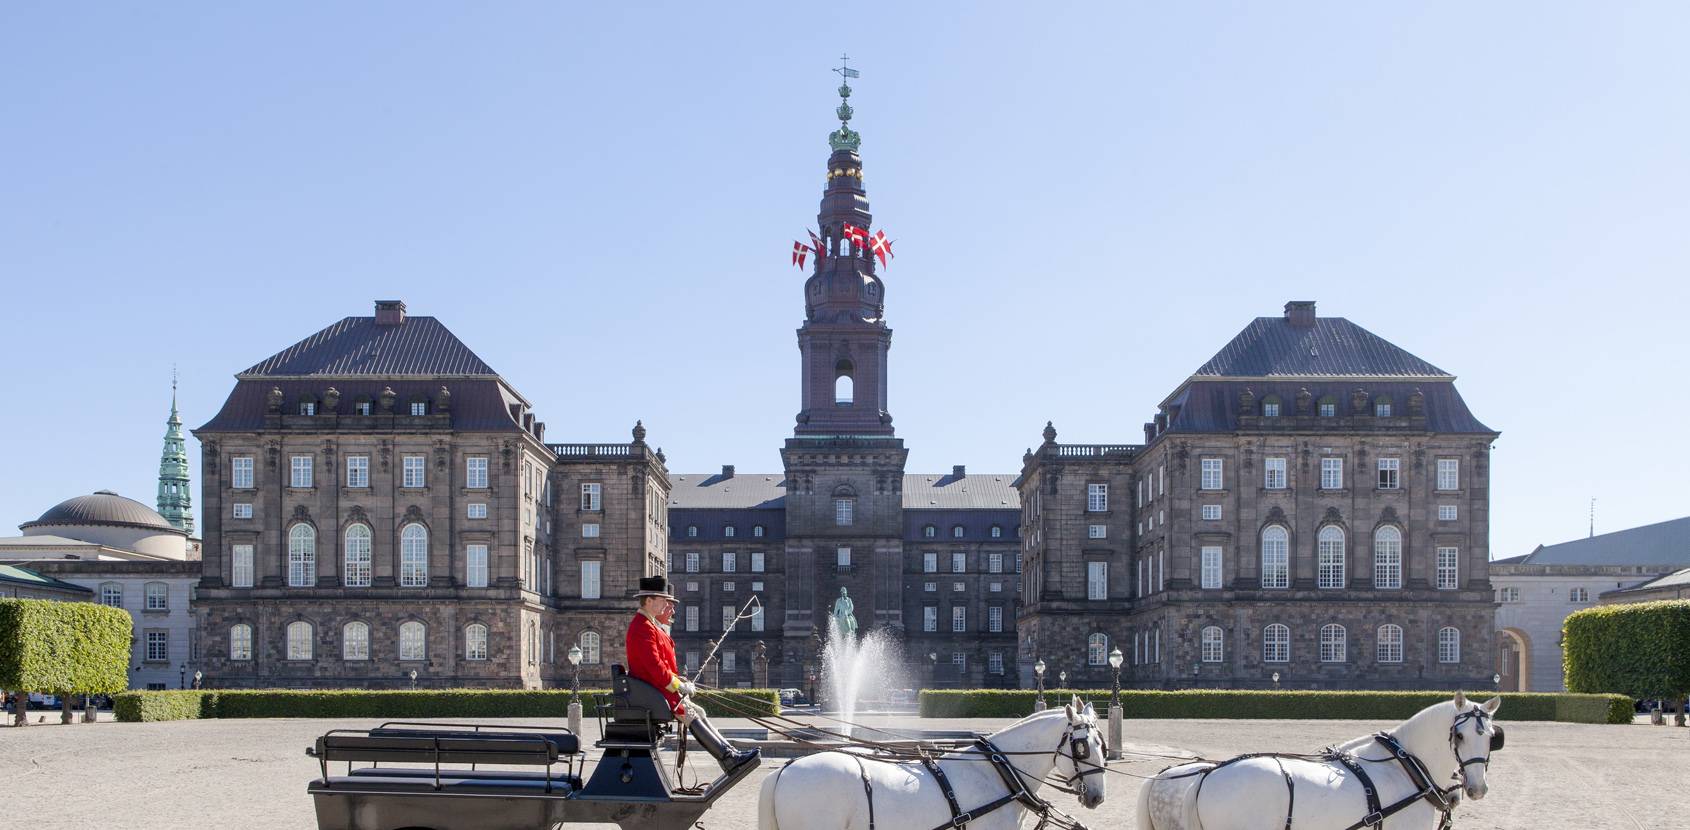 Denmark Copenhagen Christiansborg Palace Christiansborg Palace Copenhagen - Copenhagen - Denmark